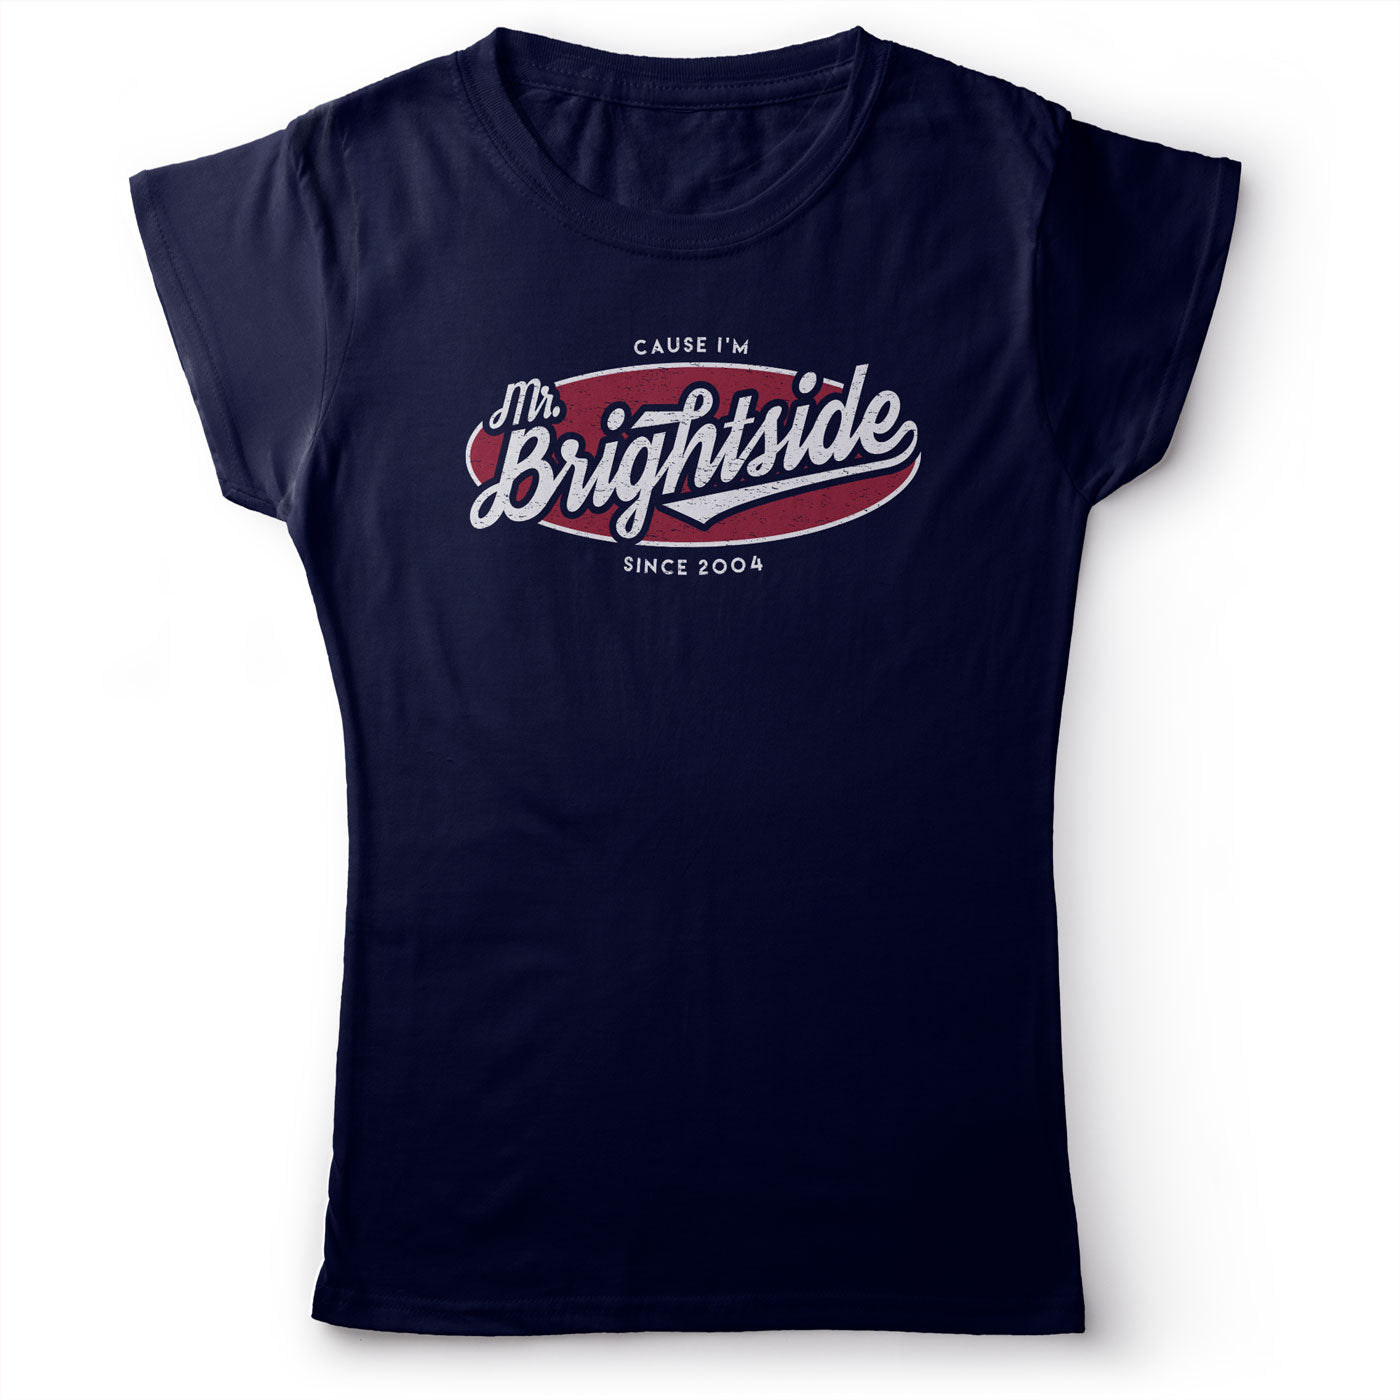 The Killers - Mr. Brightside - Women's T-Shirt Navy Blue 2